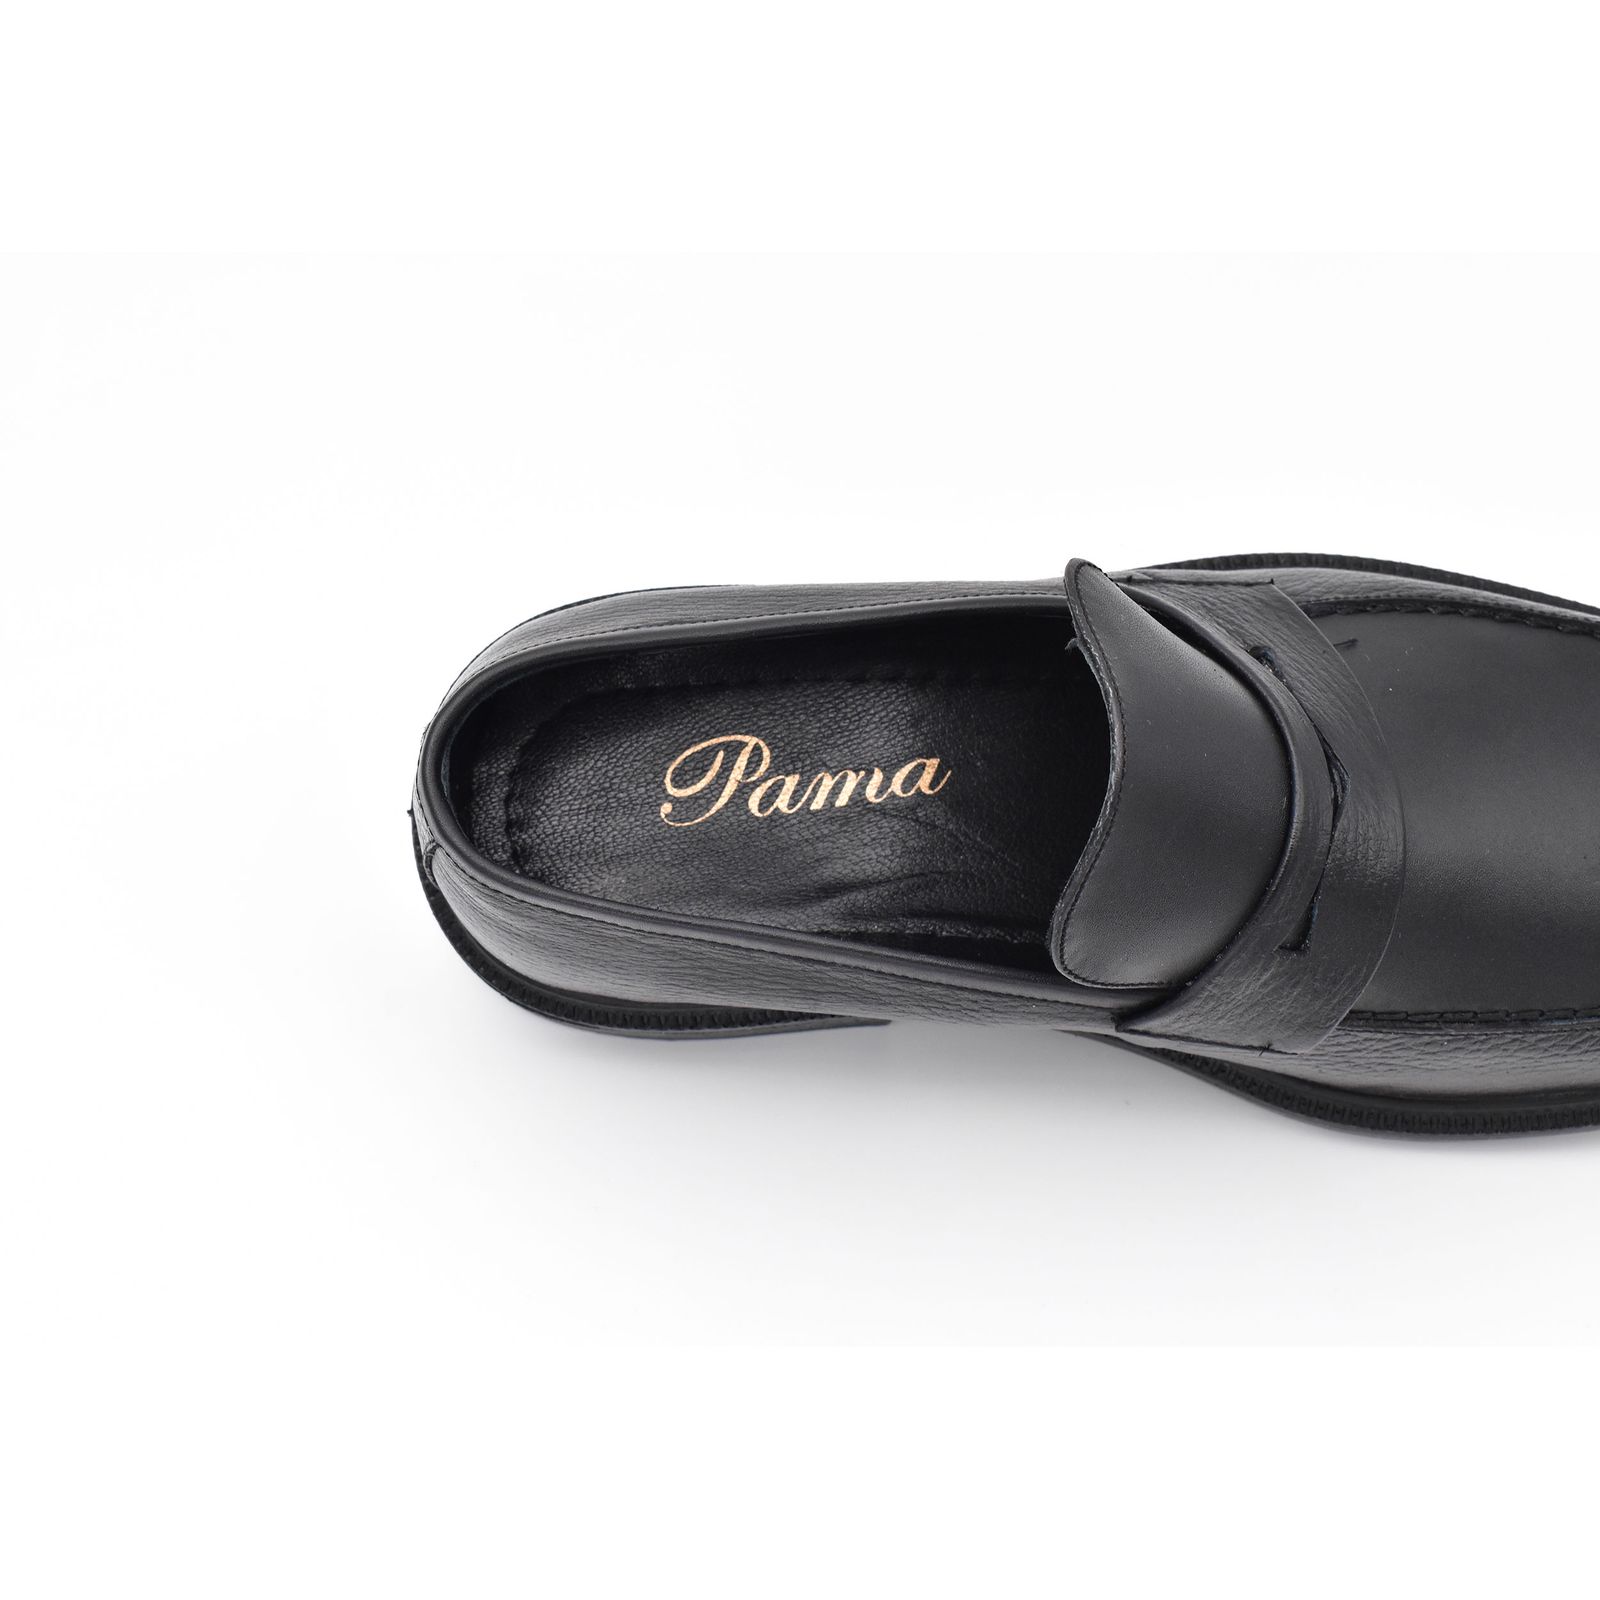 کفش مردانه پاما مدل Oscar کد G1189 -  - 10